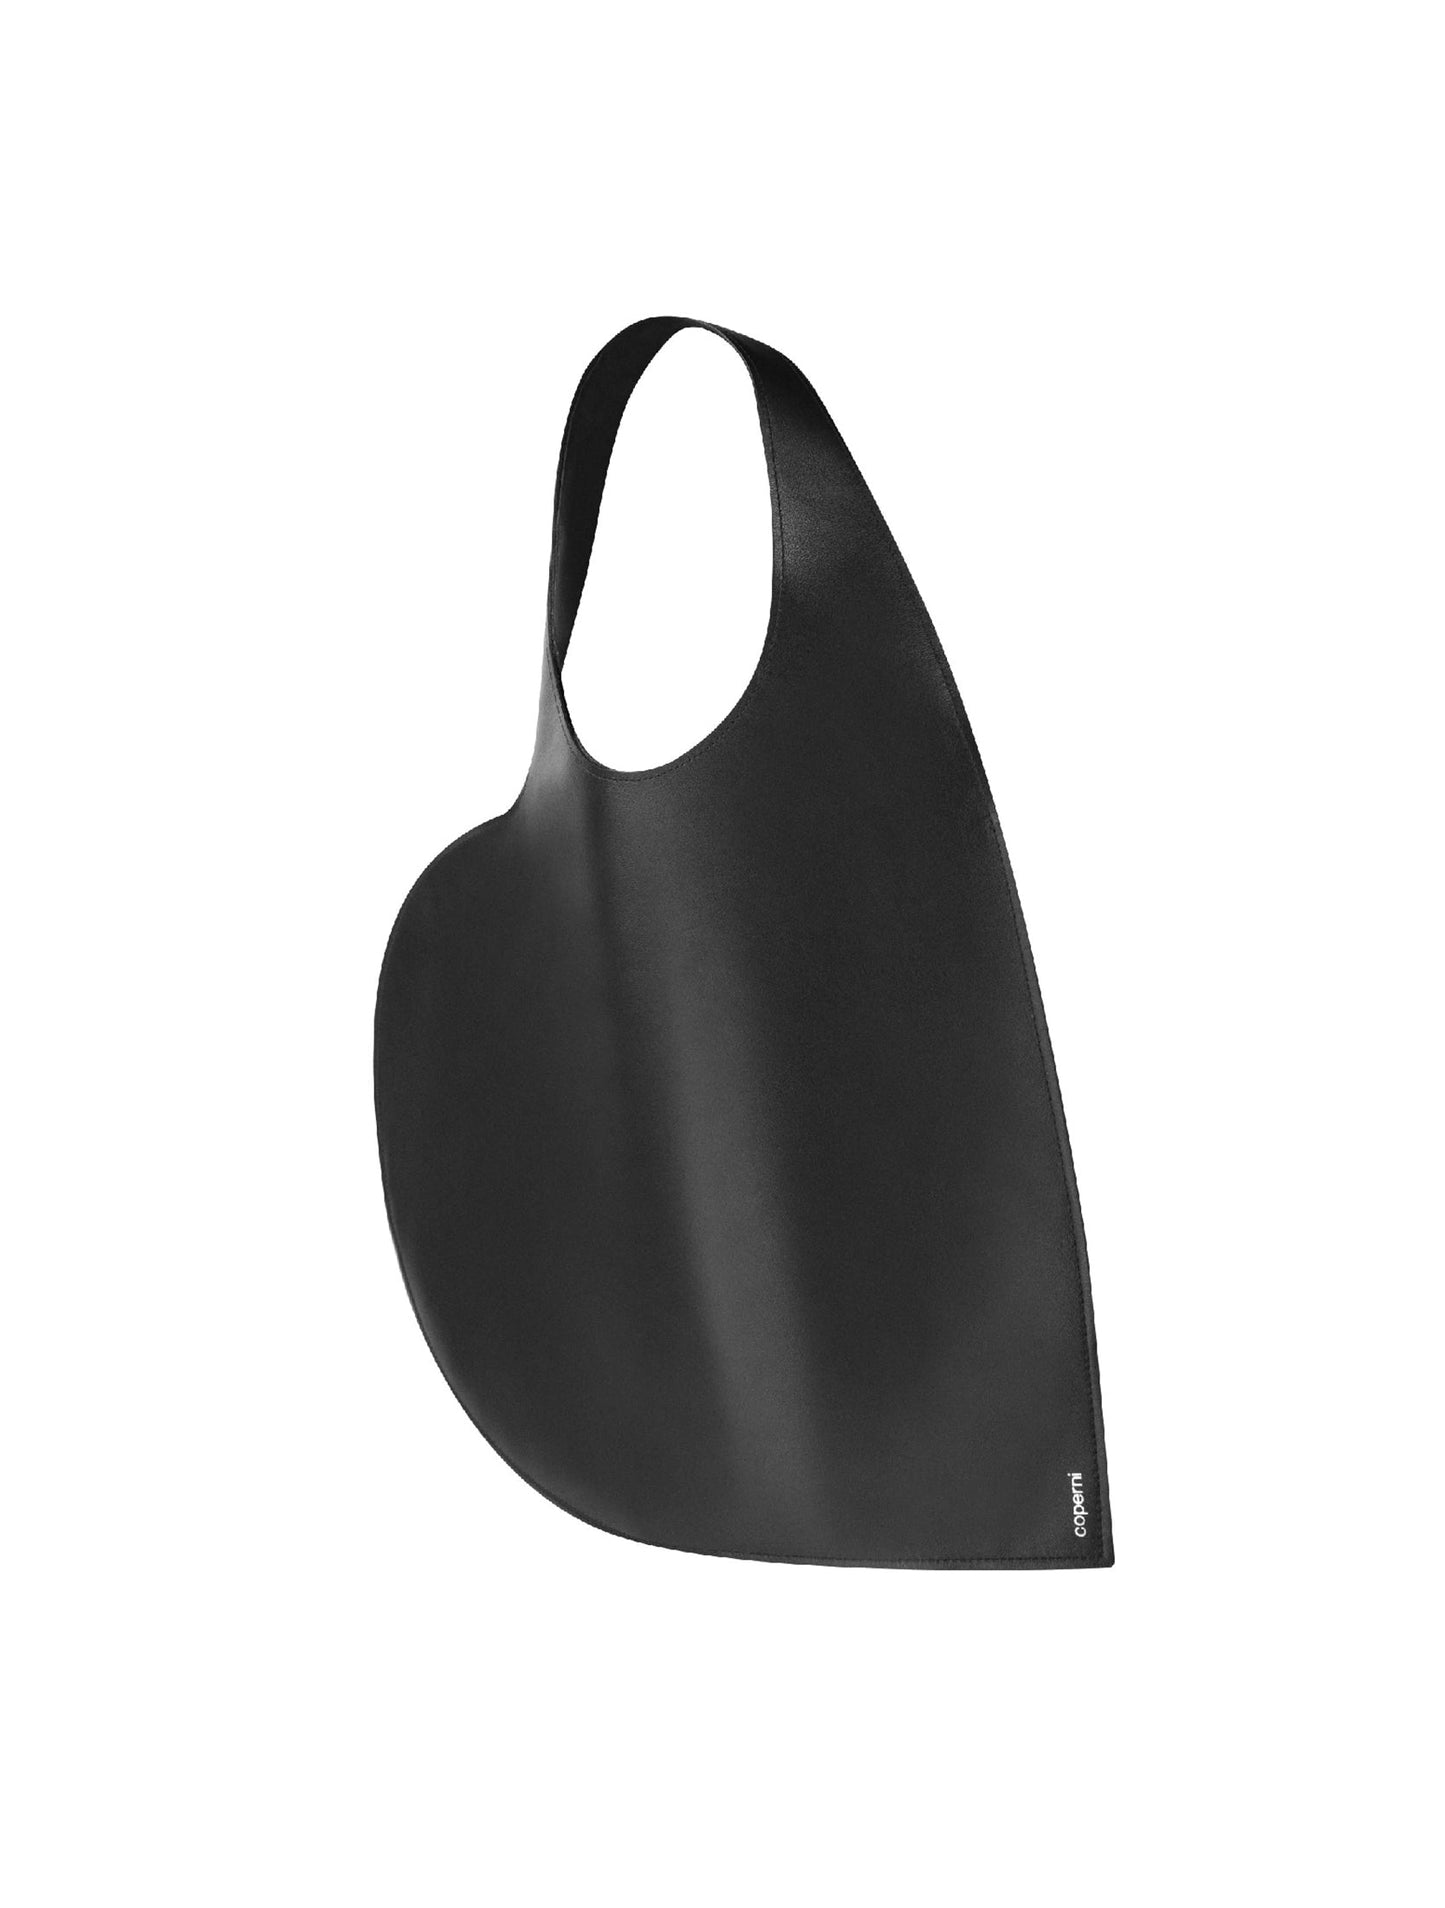 Coperni Black Heart Tote Bag